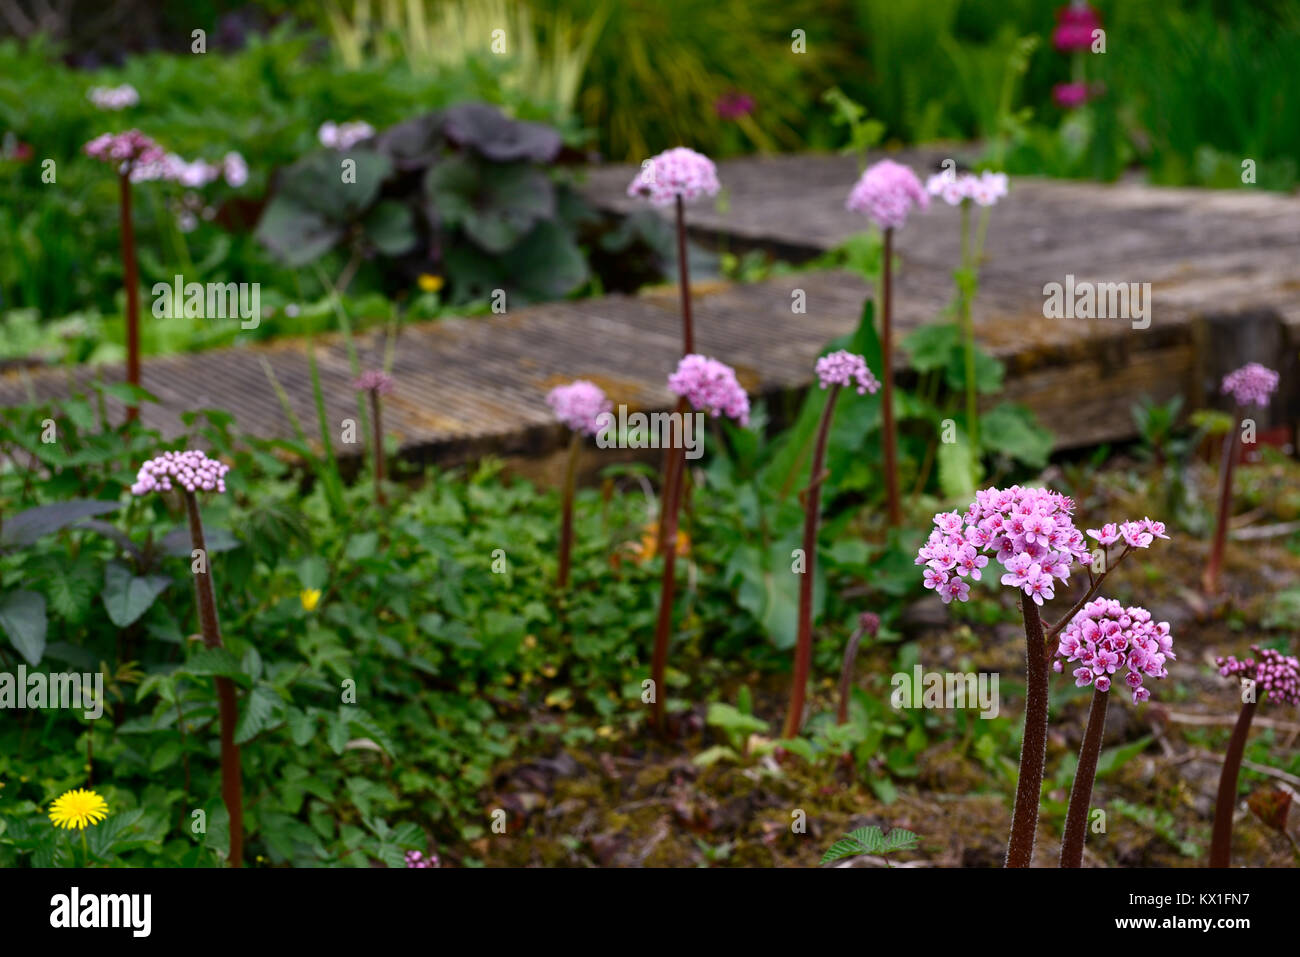 Darmera peltata,Umbrella plant,Indian rhubarb,flower,damp,boggy,moist,garden,raised,walkway,wooden,path,decking,RM floral Stock Photo